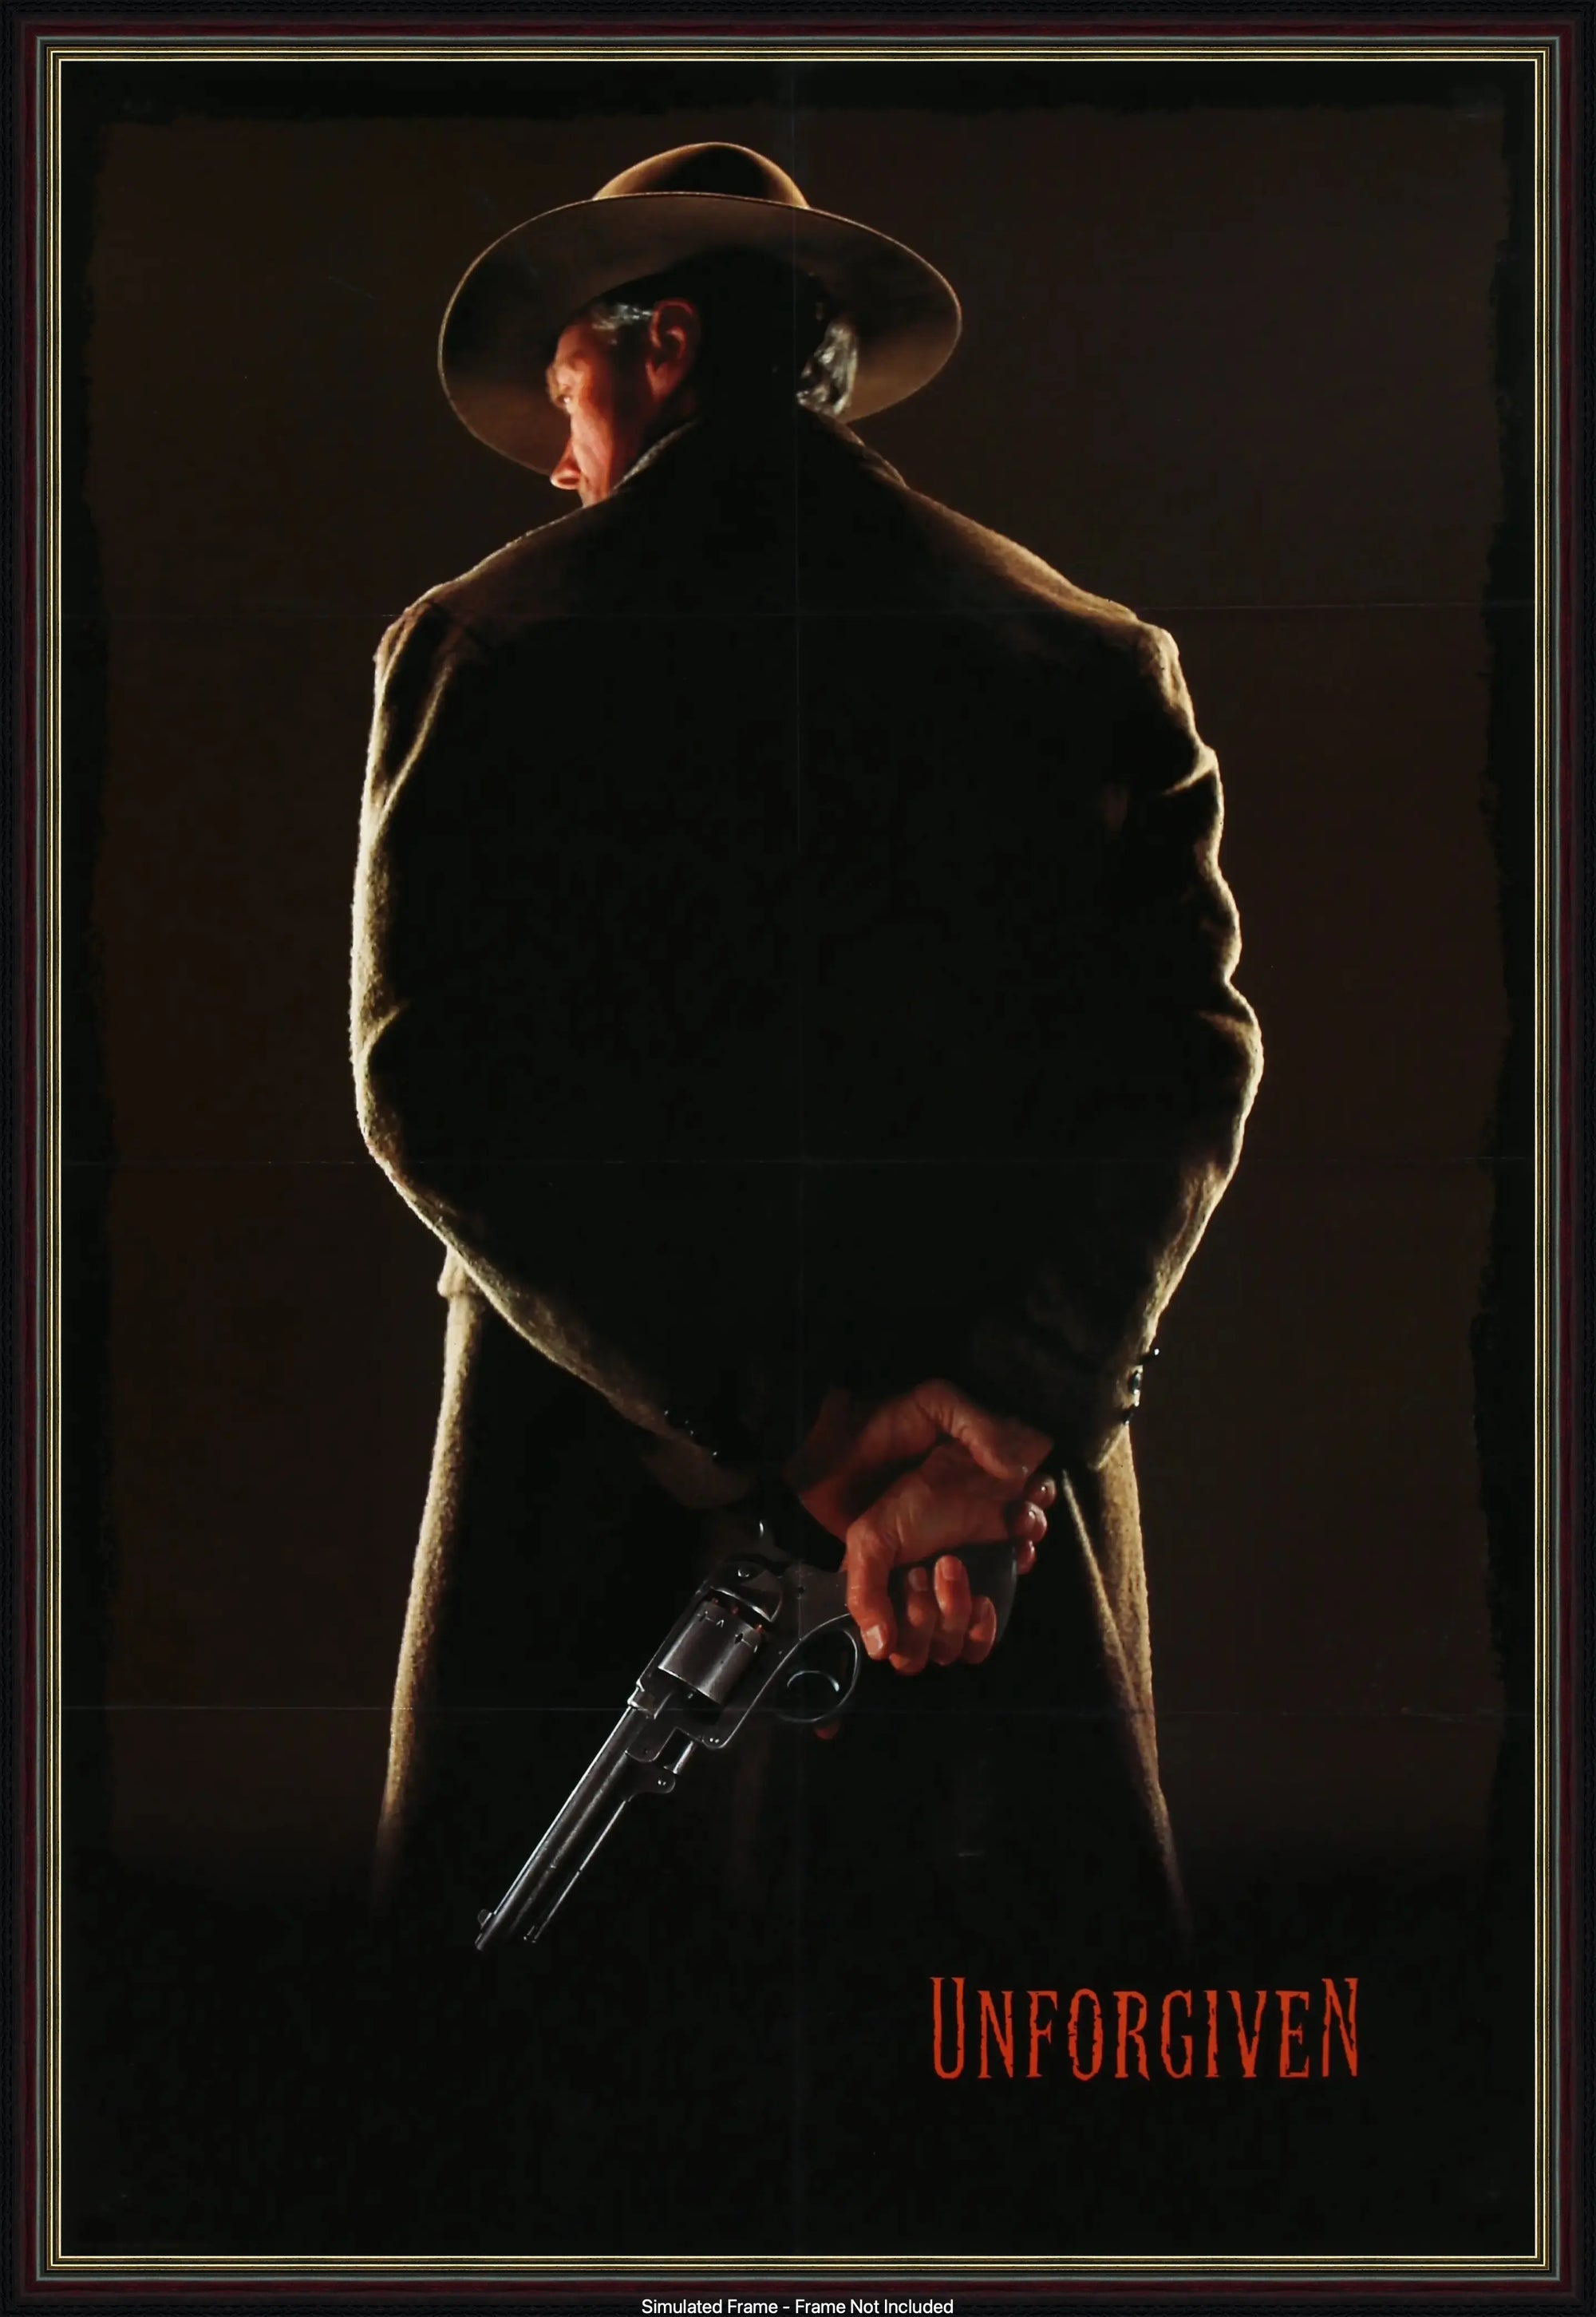 Unforgiven (1992) original movie poster for sale at Original Film Art